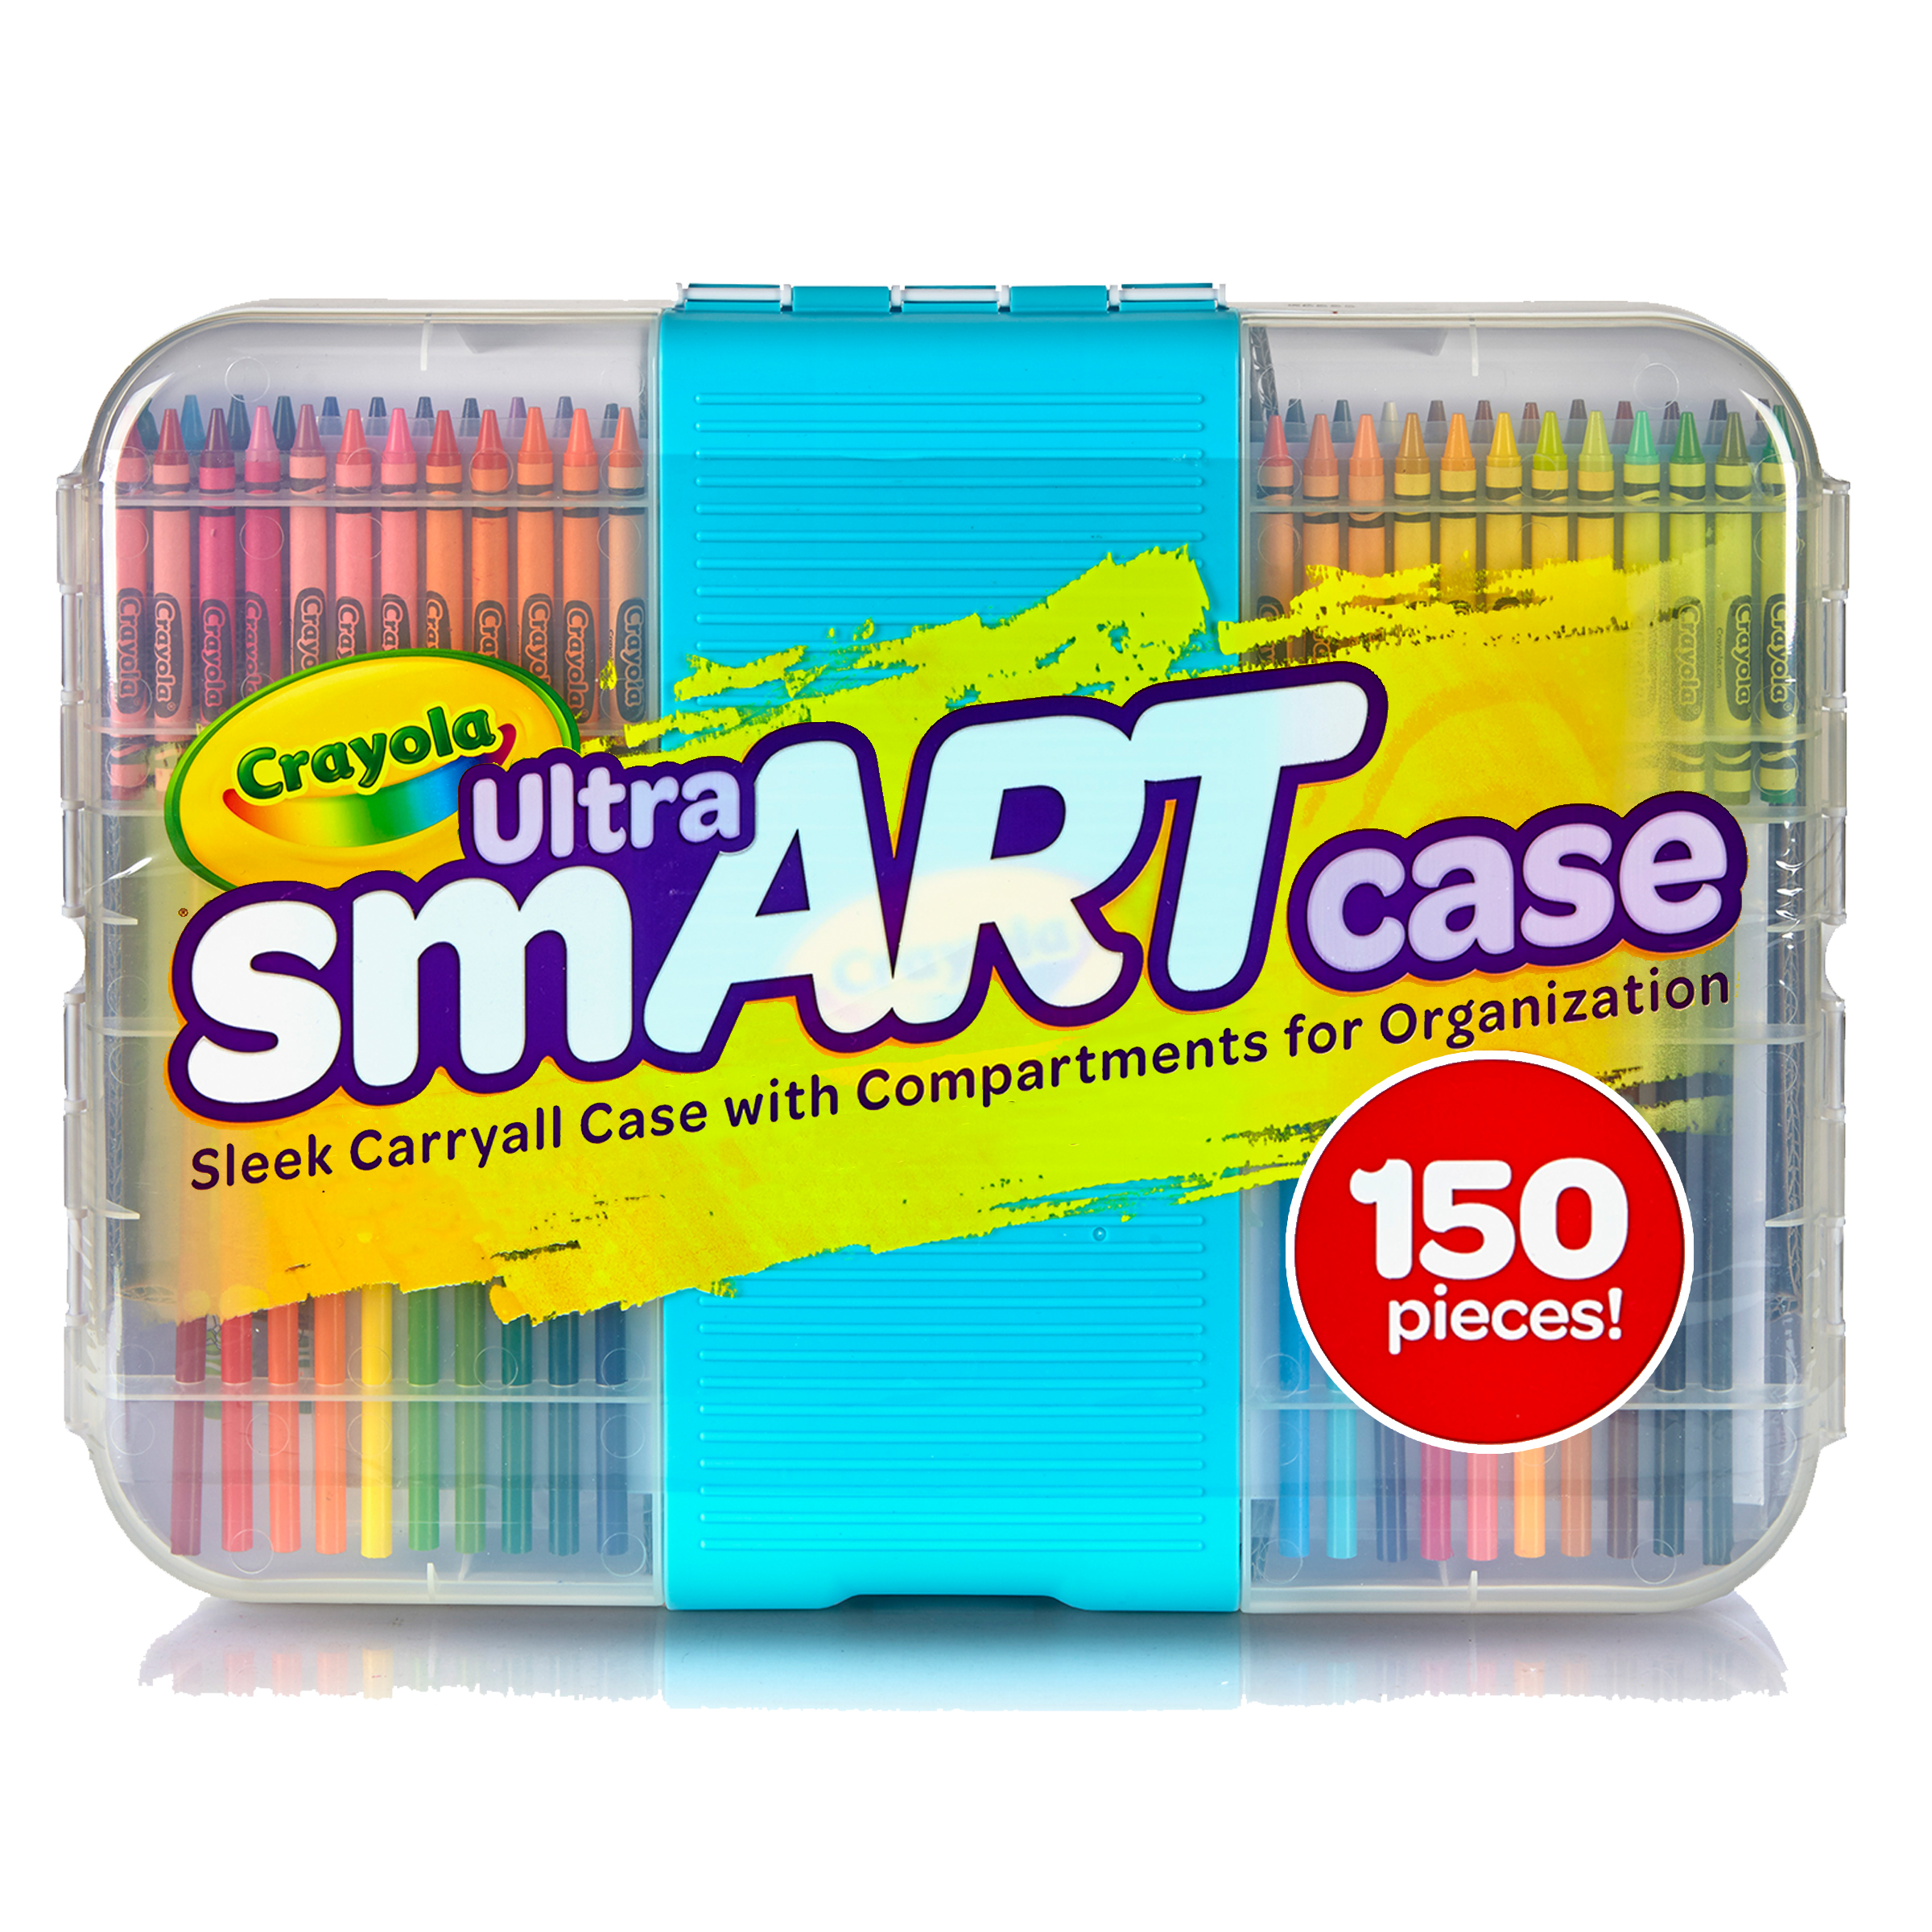 Crayola Ultra SmART Case Next.